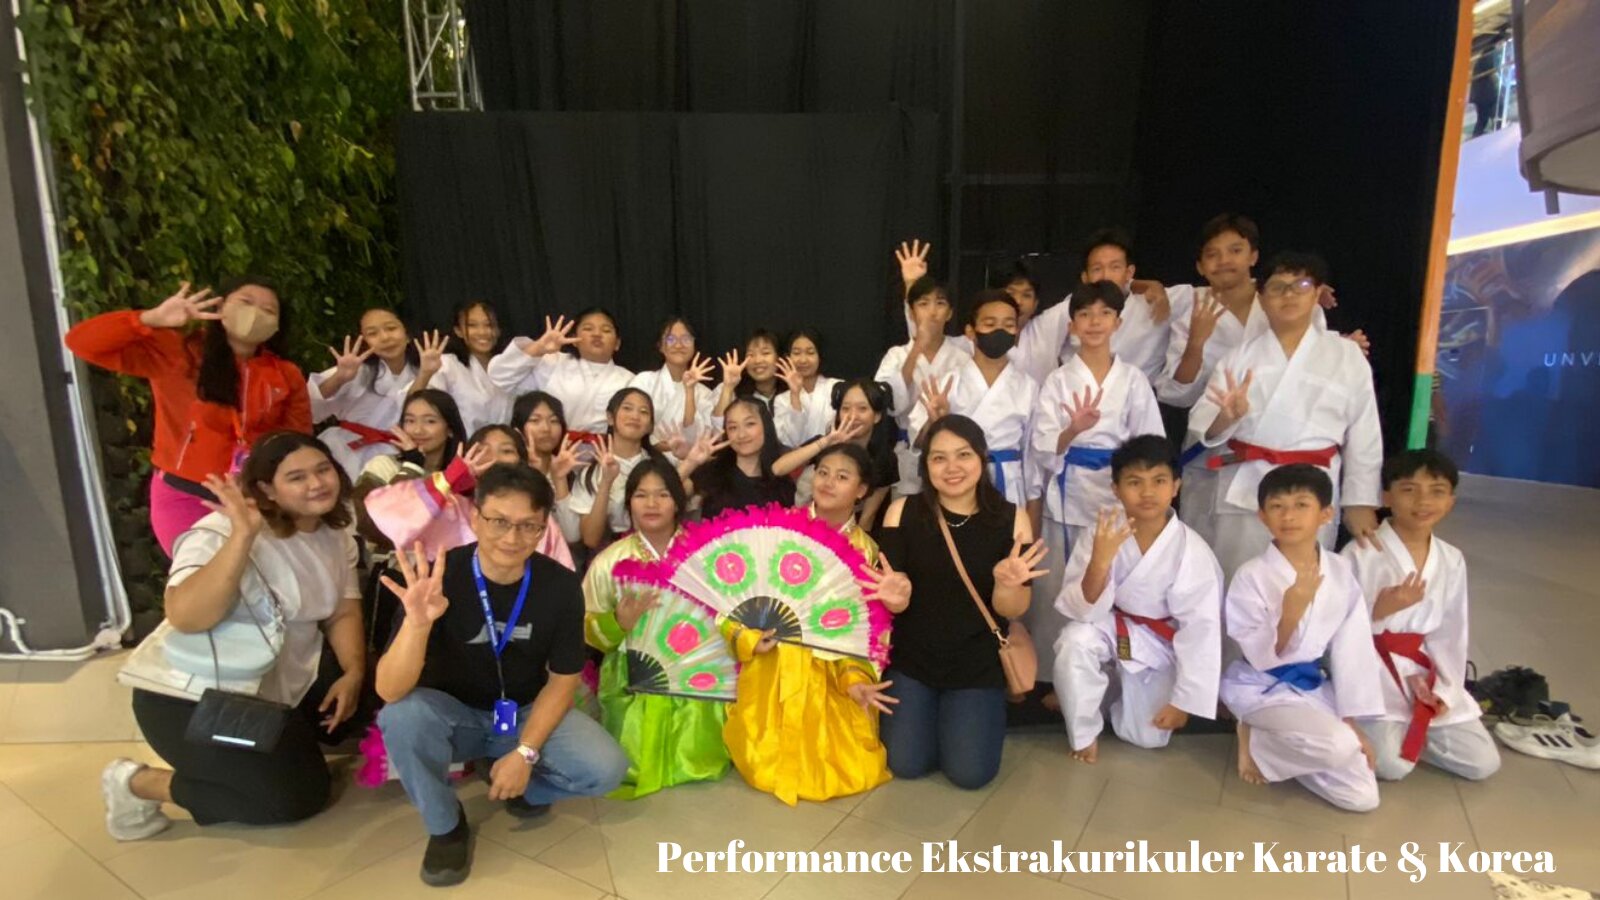 Performance Ekstrakurikuler Karate & Korea